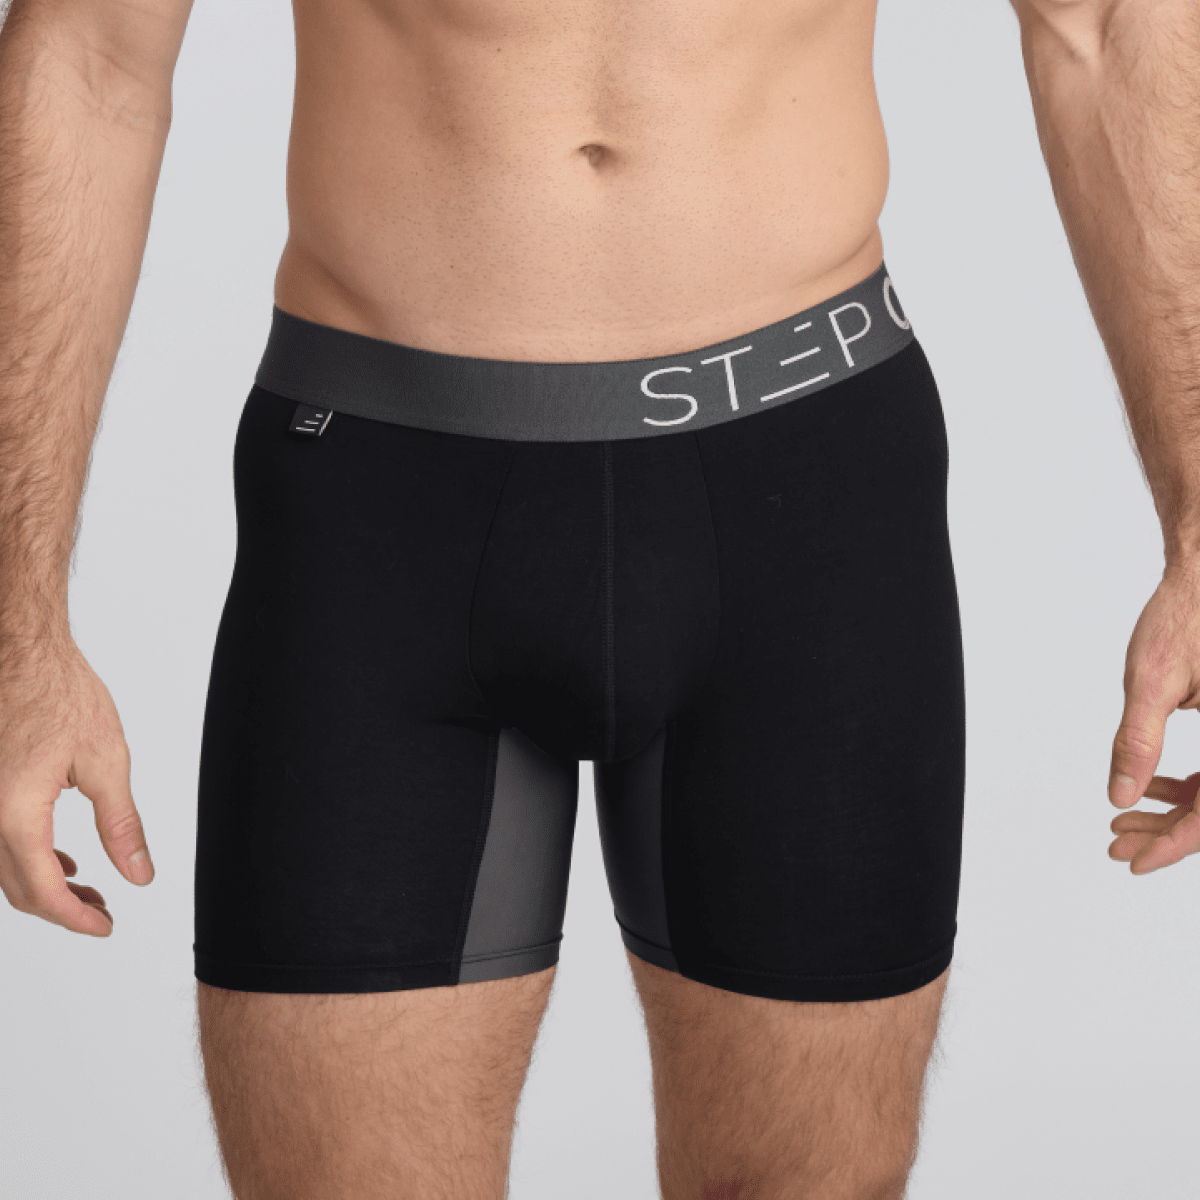 Boxer Brief - Black Currants - Bamboo Underwear